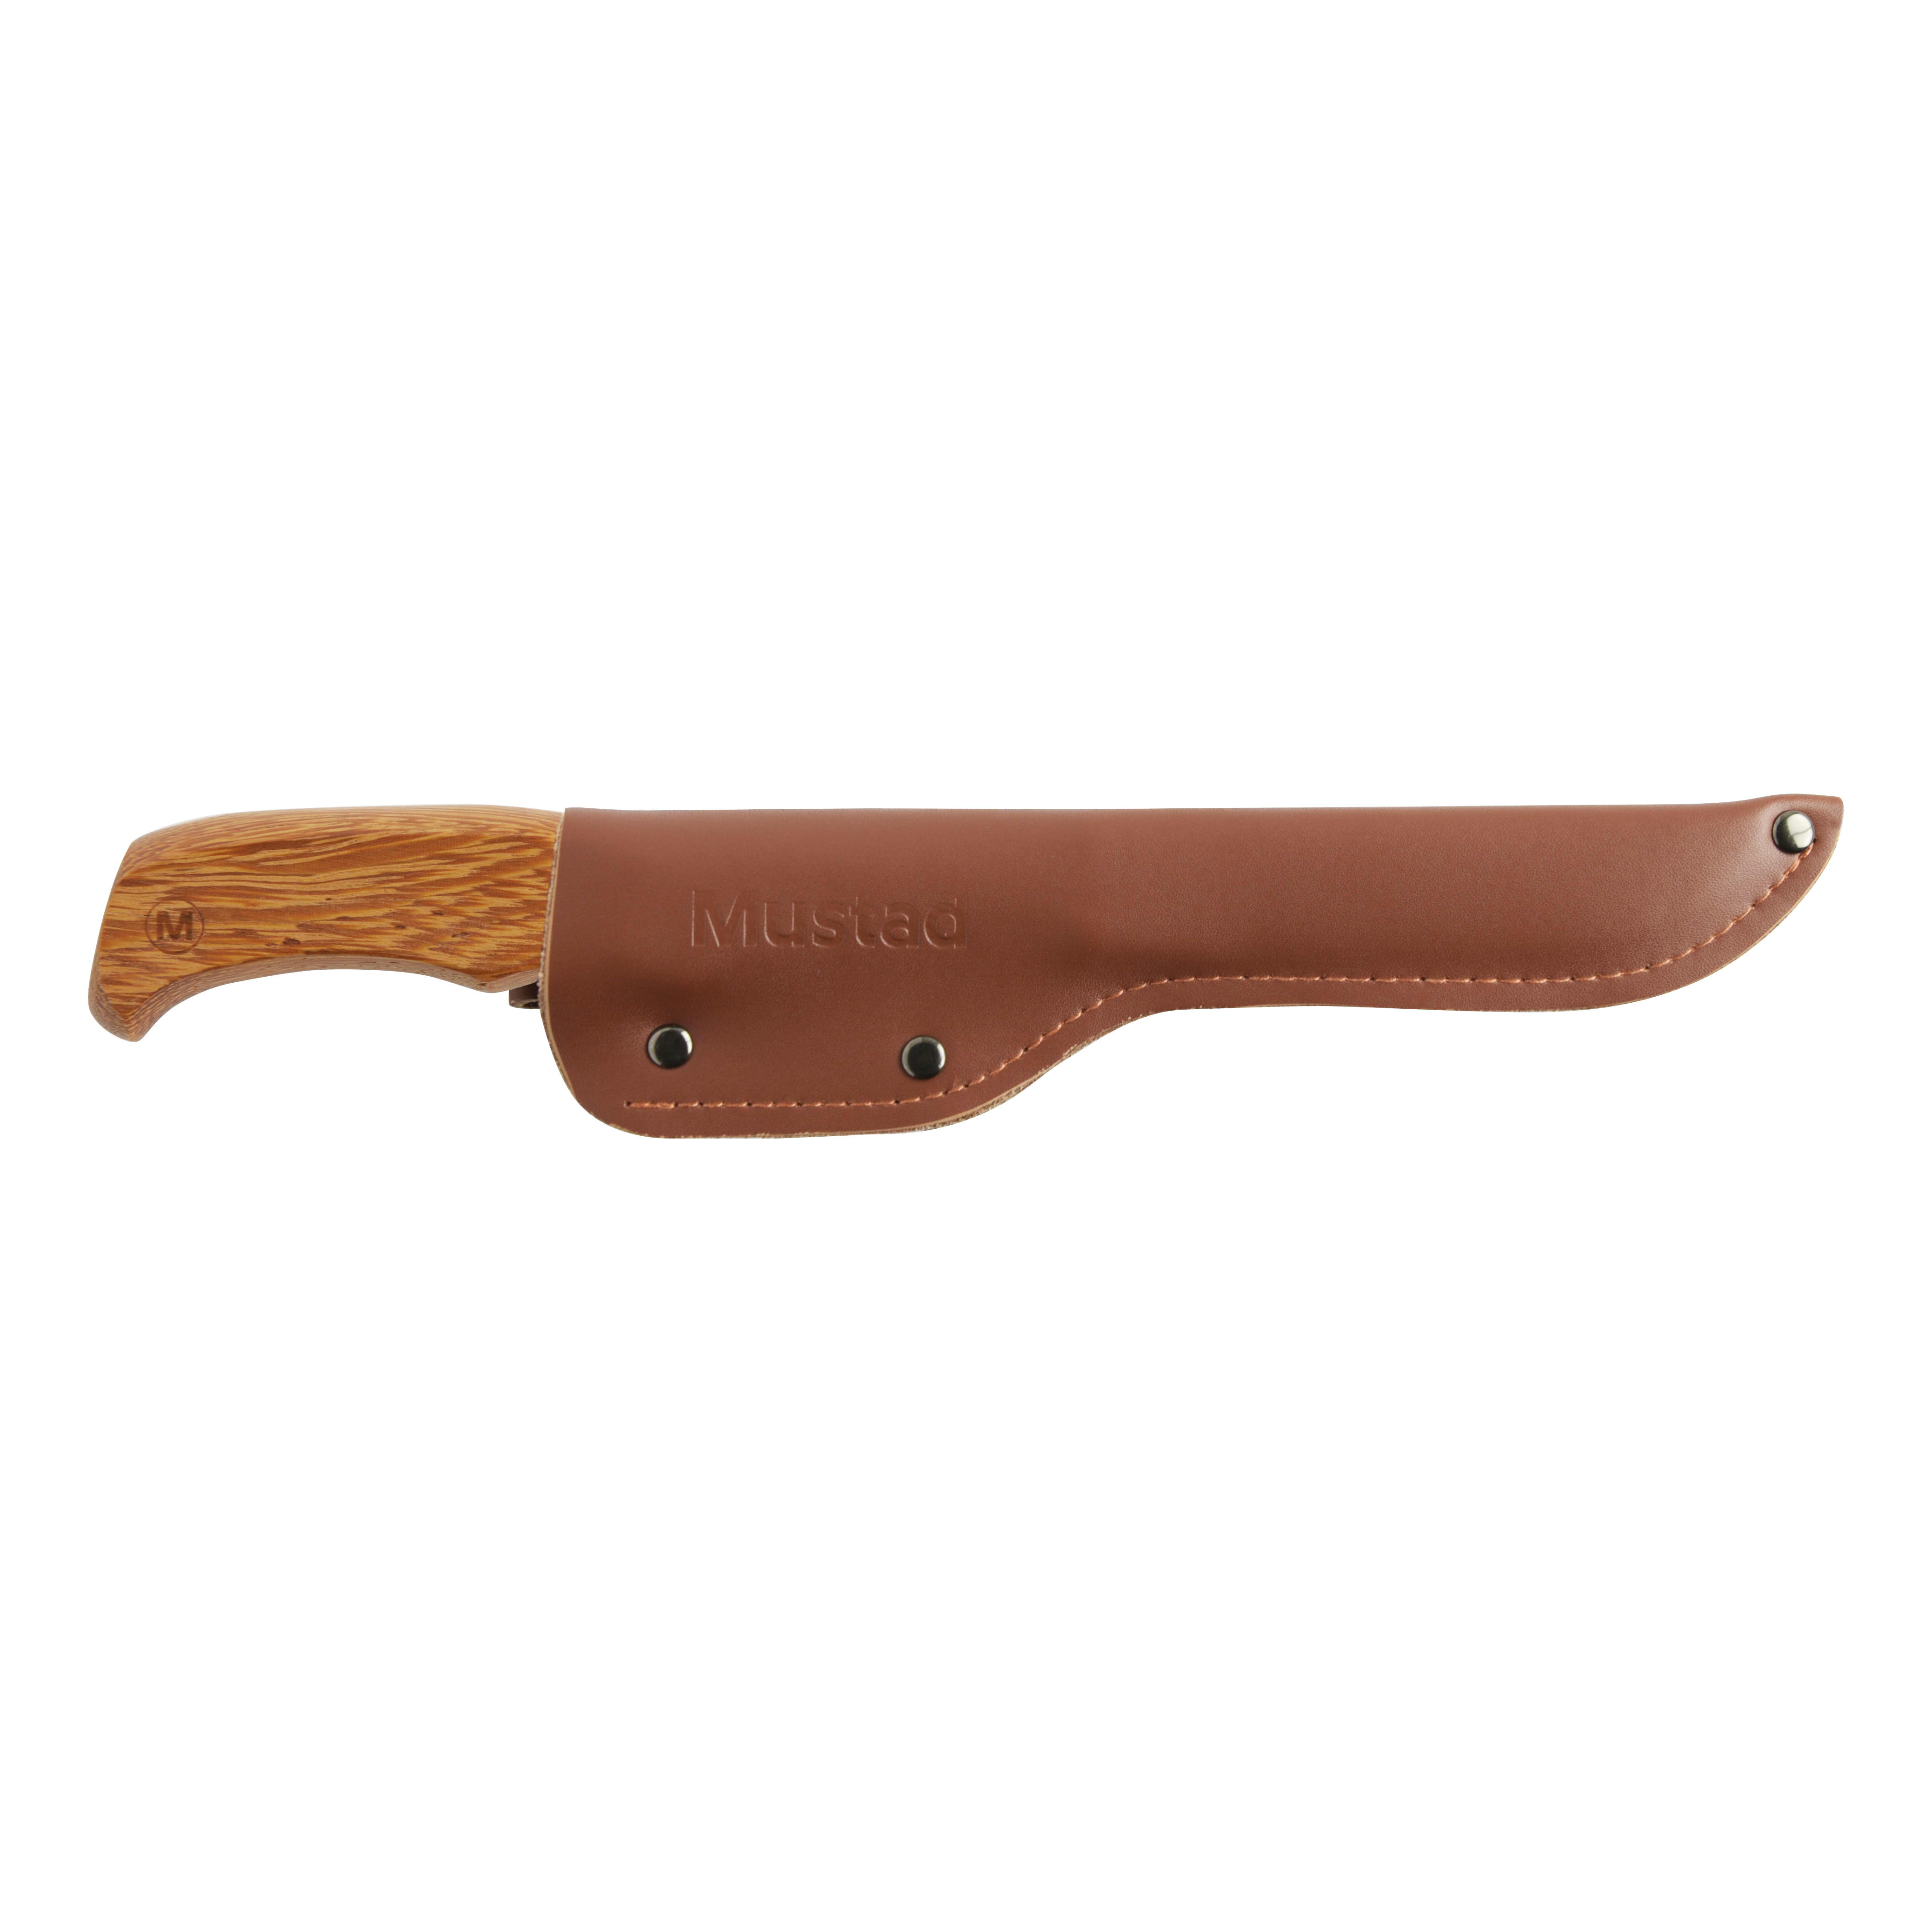 Mustad 6" Wood Handle Fillet Knife - In Sheath View